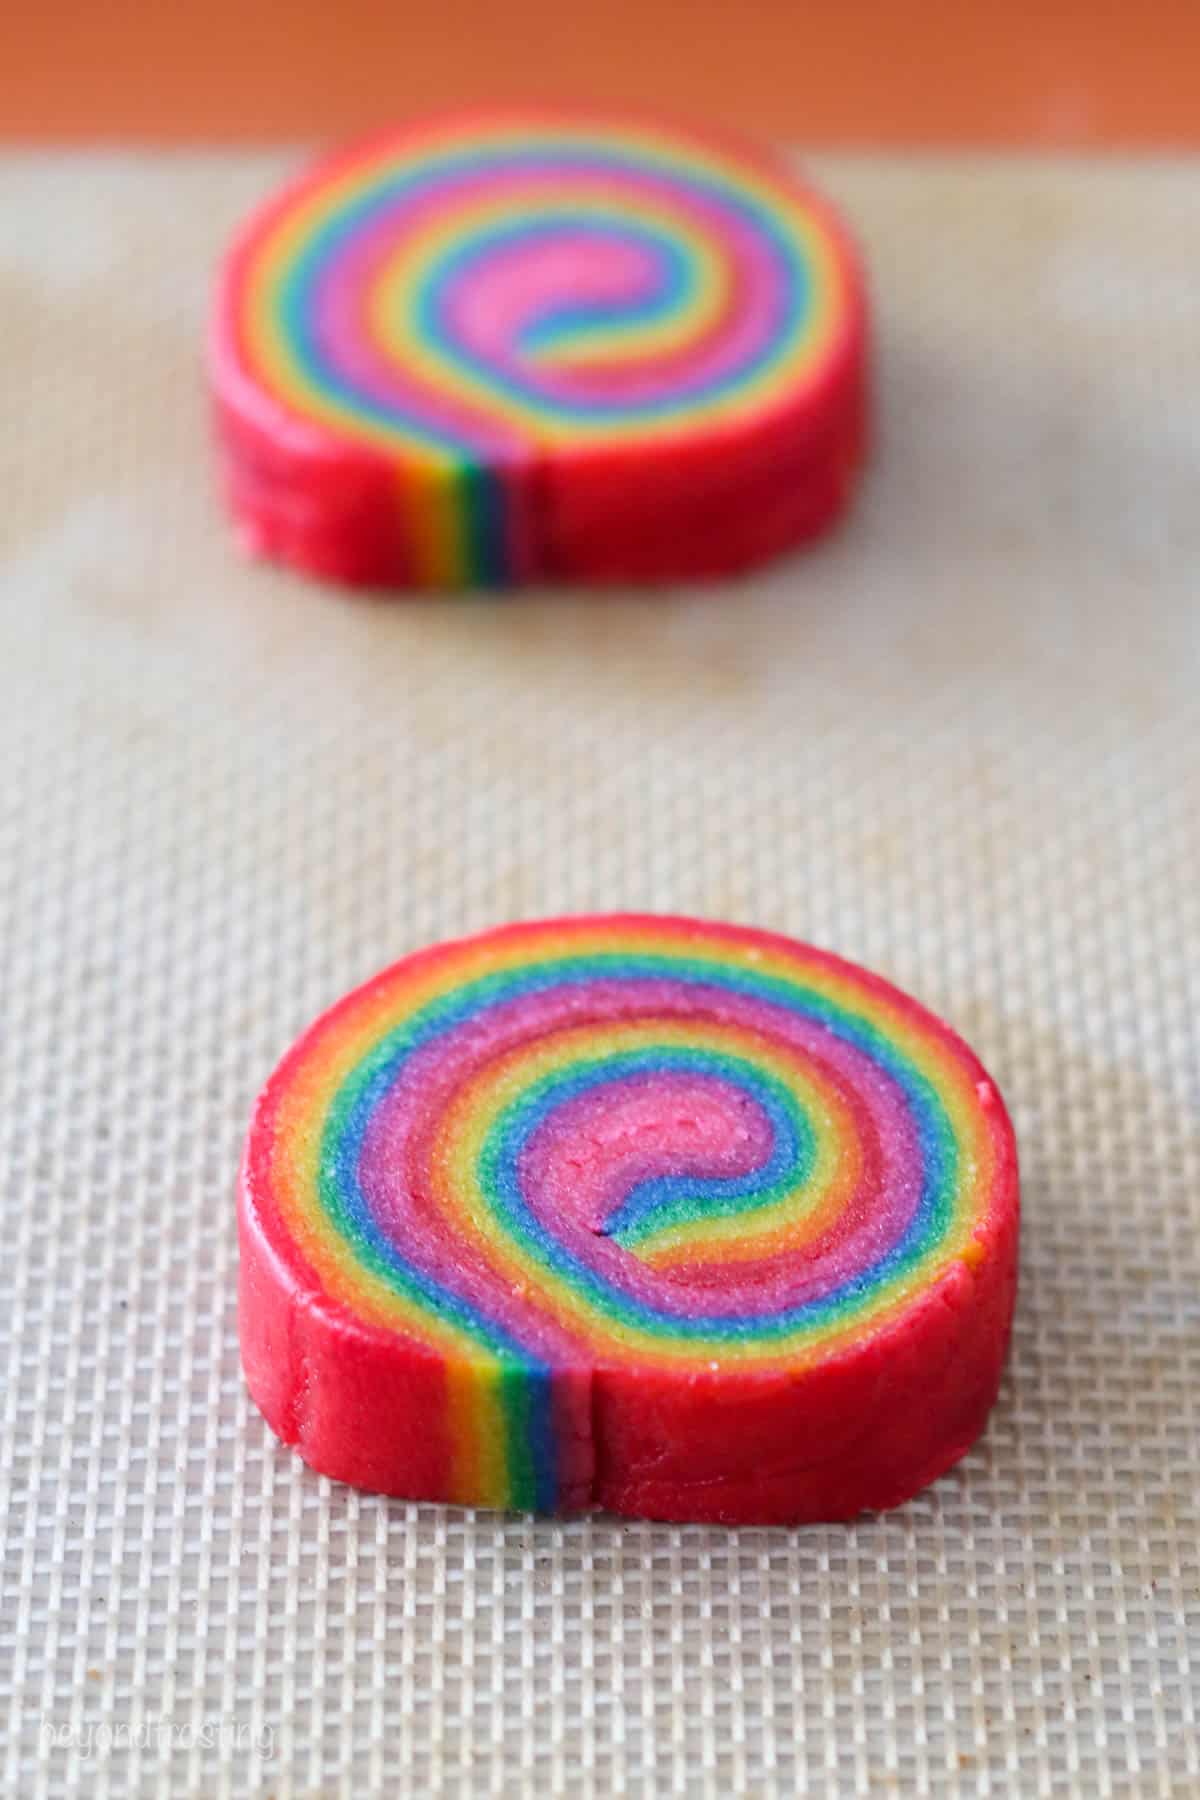 Two rainbow swirl cookies on a baking sheet.